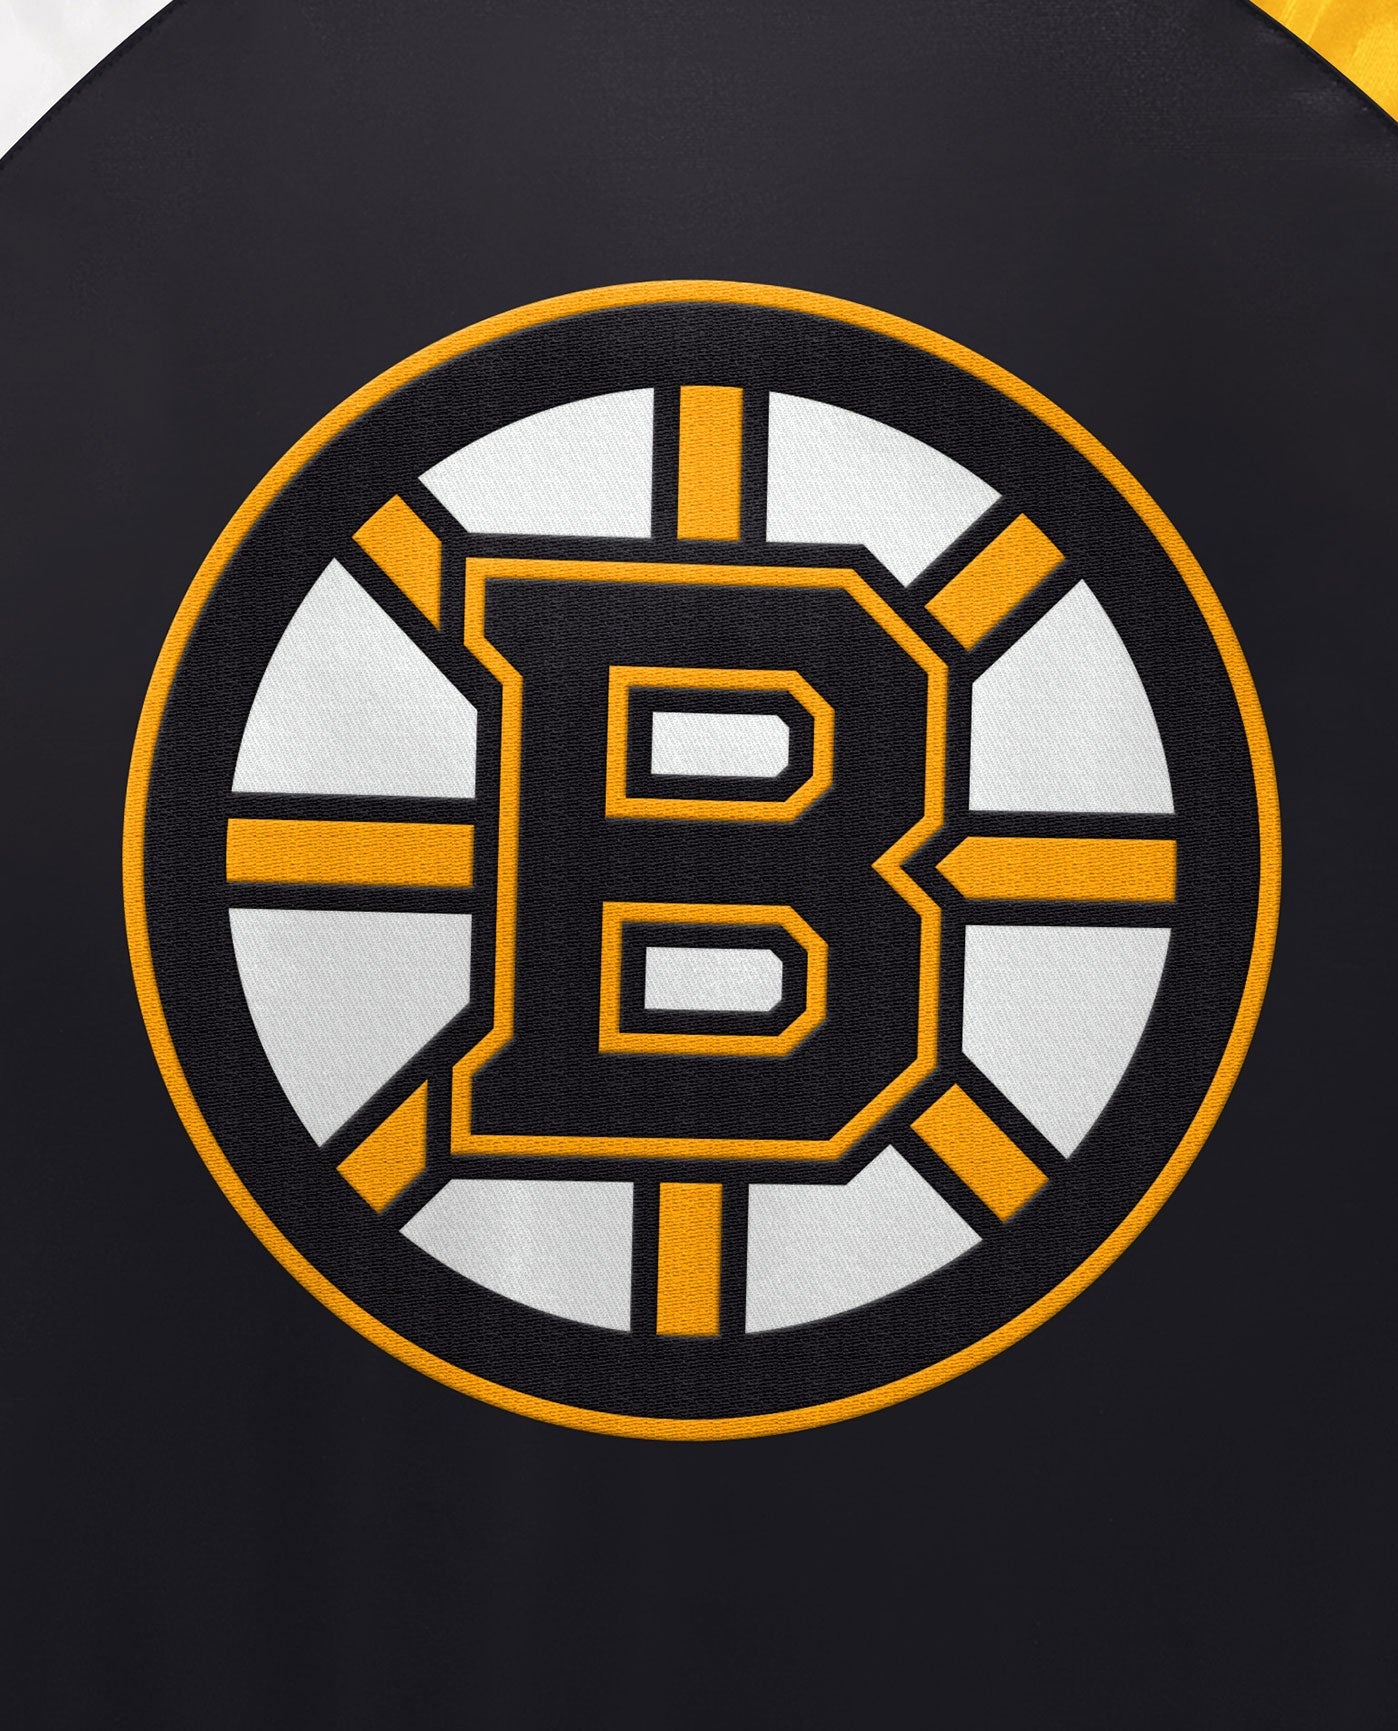 Starter Black Youth Boston Bruins Varsity Satin Full-Snap Jacket Youth-S / Black